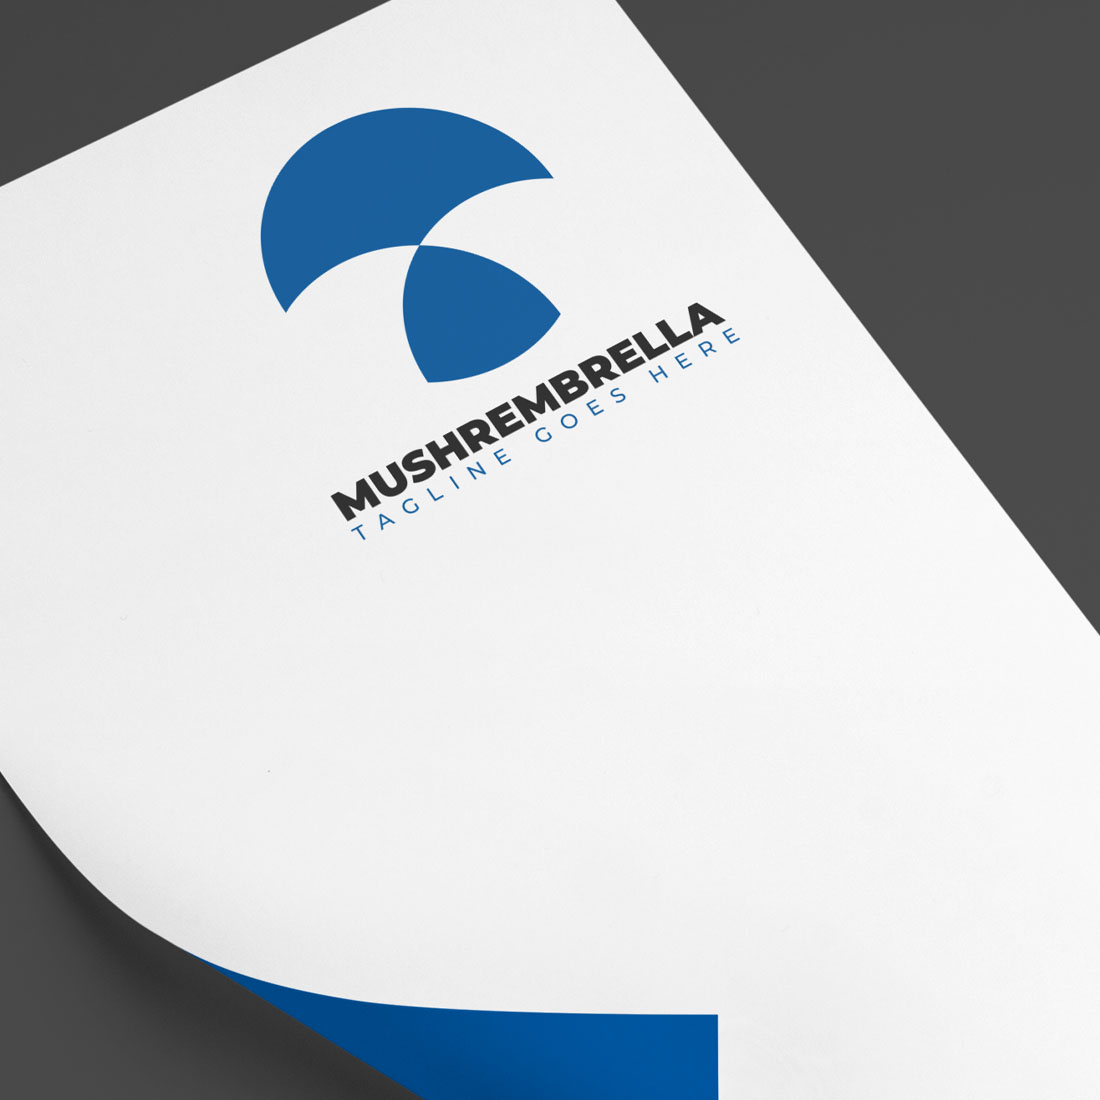 Stylish Umbrella Logo Design cover image.